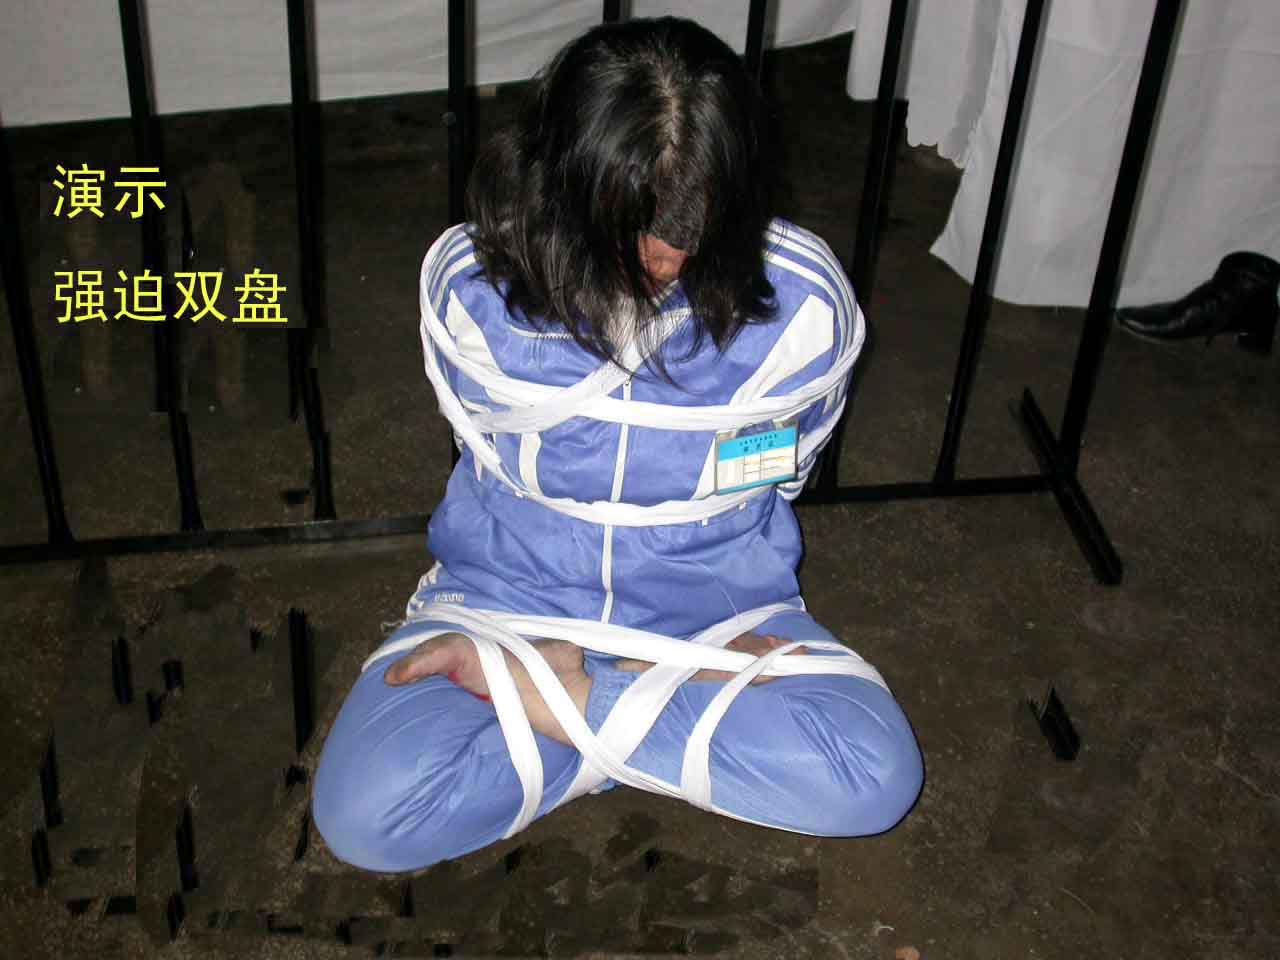 Inhuman Tortures Falun Dafa Practitioners Suffer At Dalian F